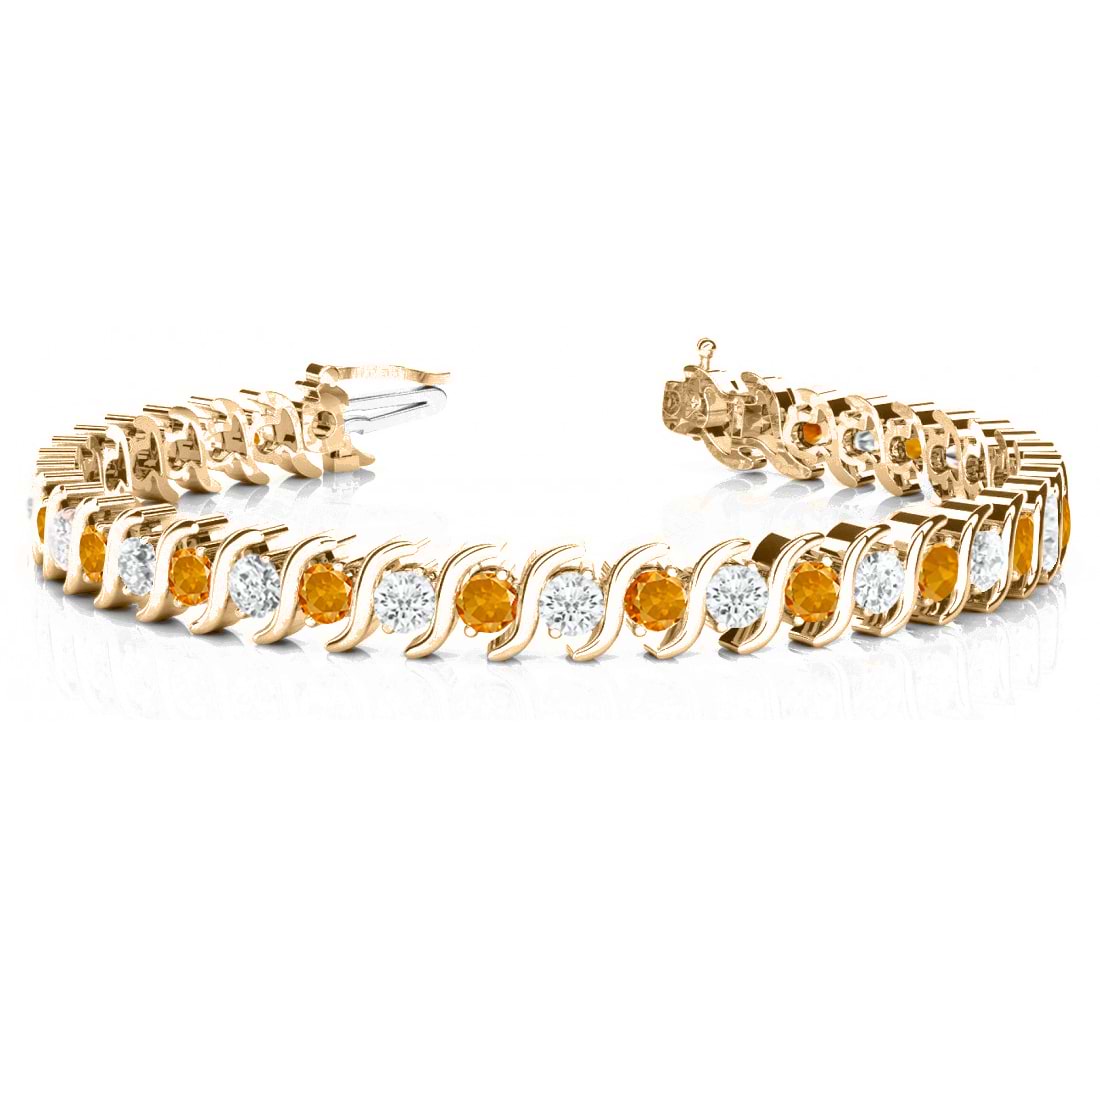 Citrine & Diamond Tennis S Link Bracelet 14k Rose Gold (4.00ct)